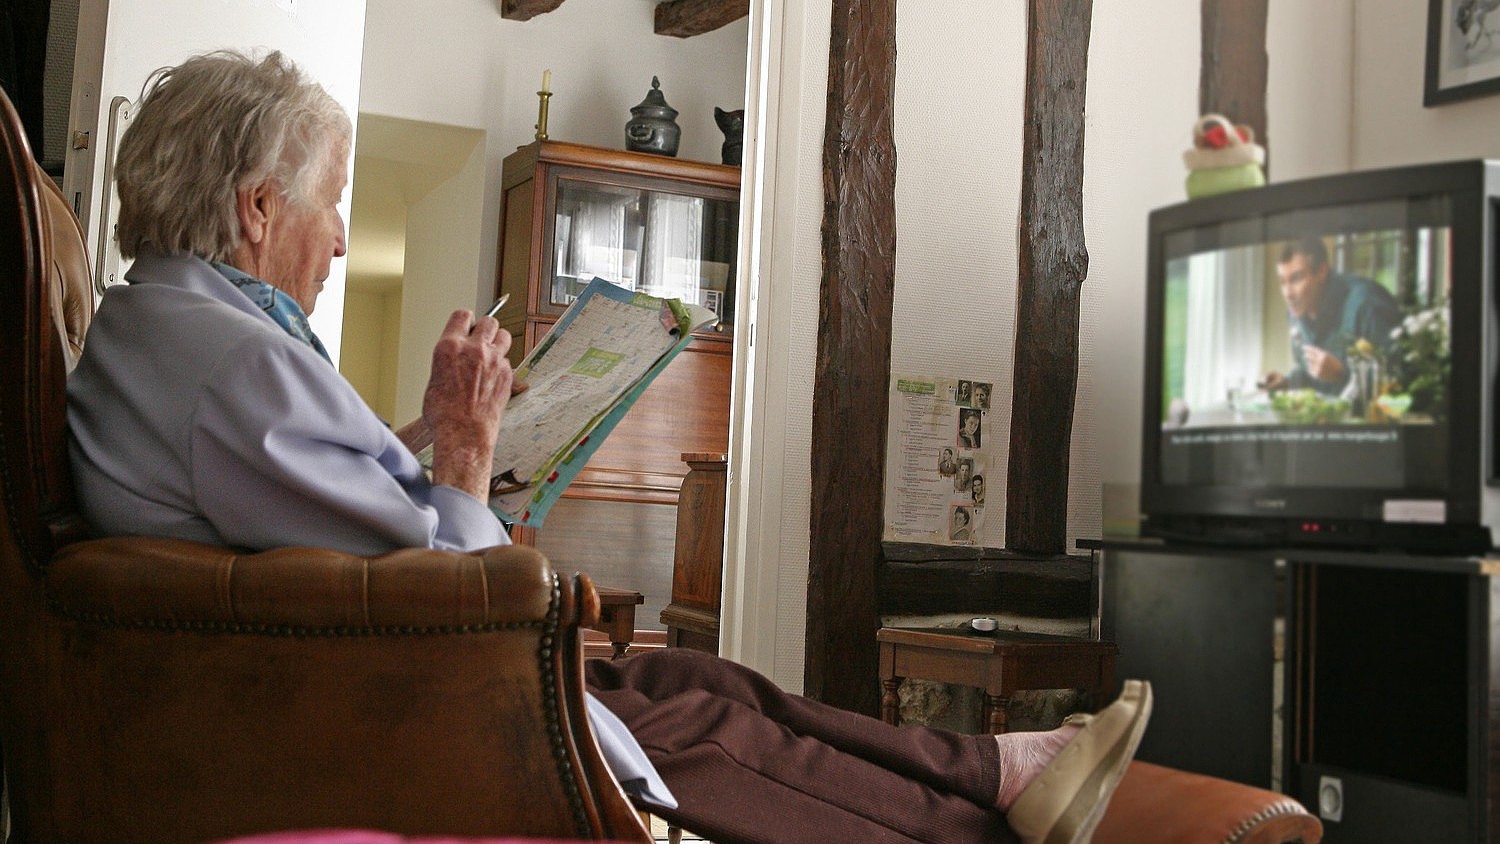 Пенсионеры по старому. Бабушка у телевизора. Старики у телевизора. Пенсионеры перед телевизором. Бабушка перед телевизором.